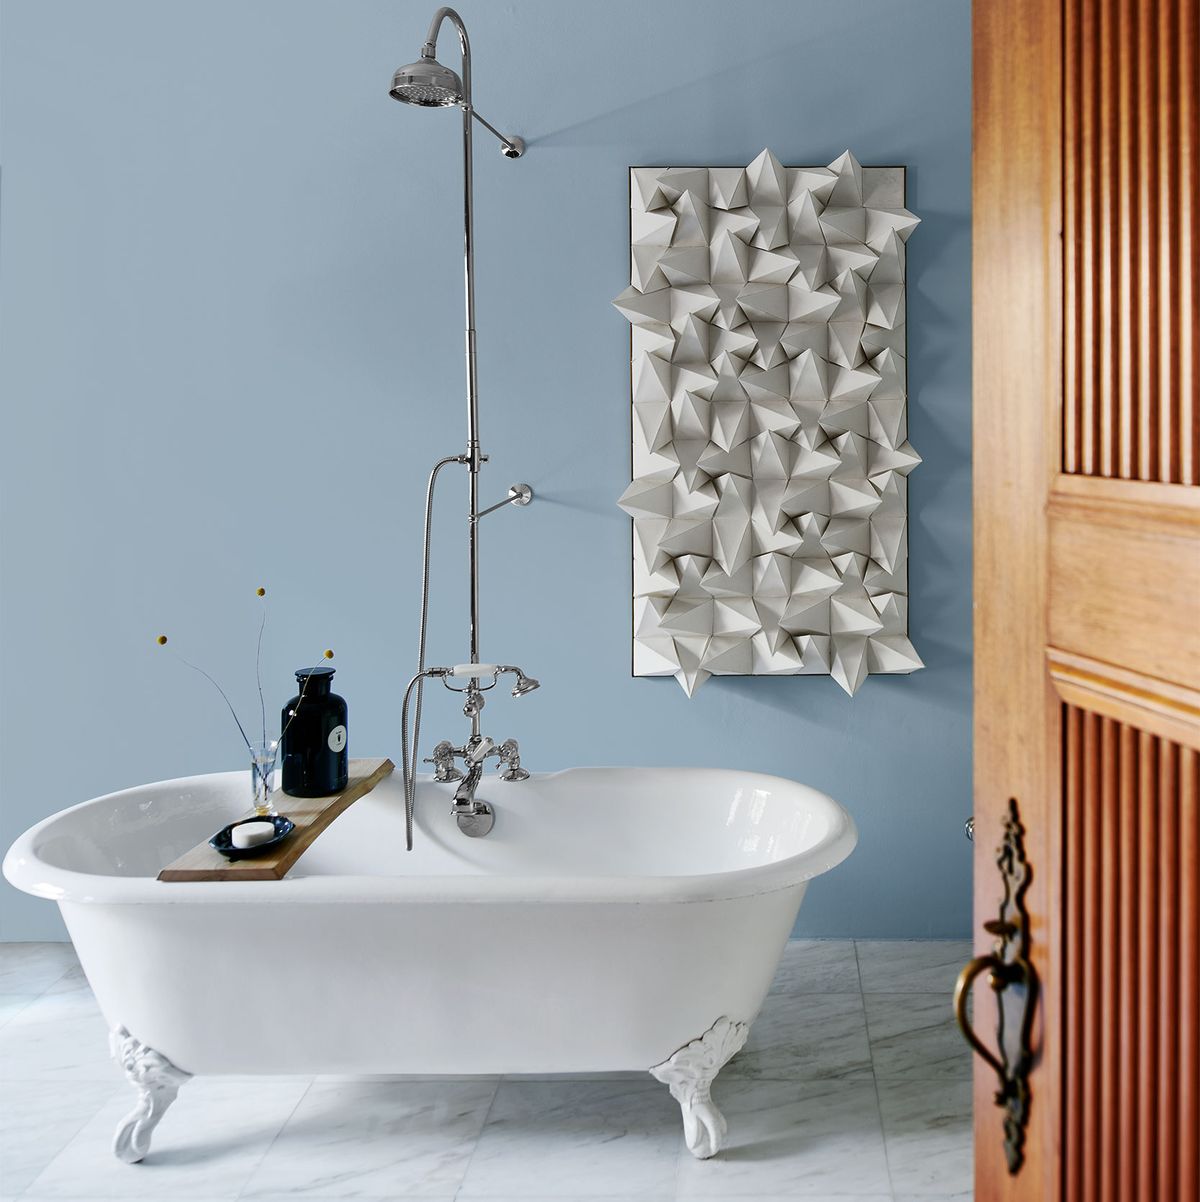 100 Small Bathroom Decor Ideas - How To Decorate A Small Bathroom